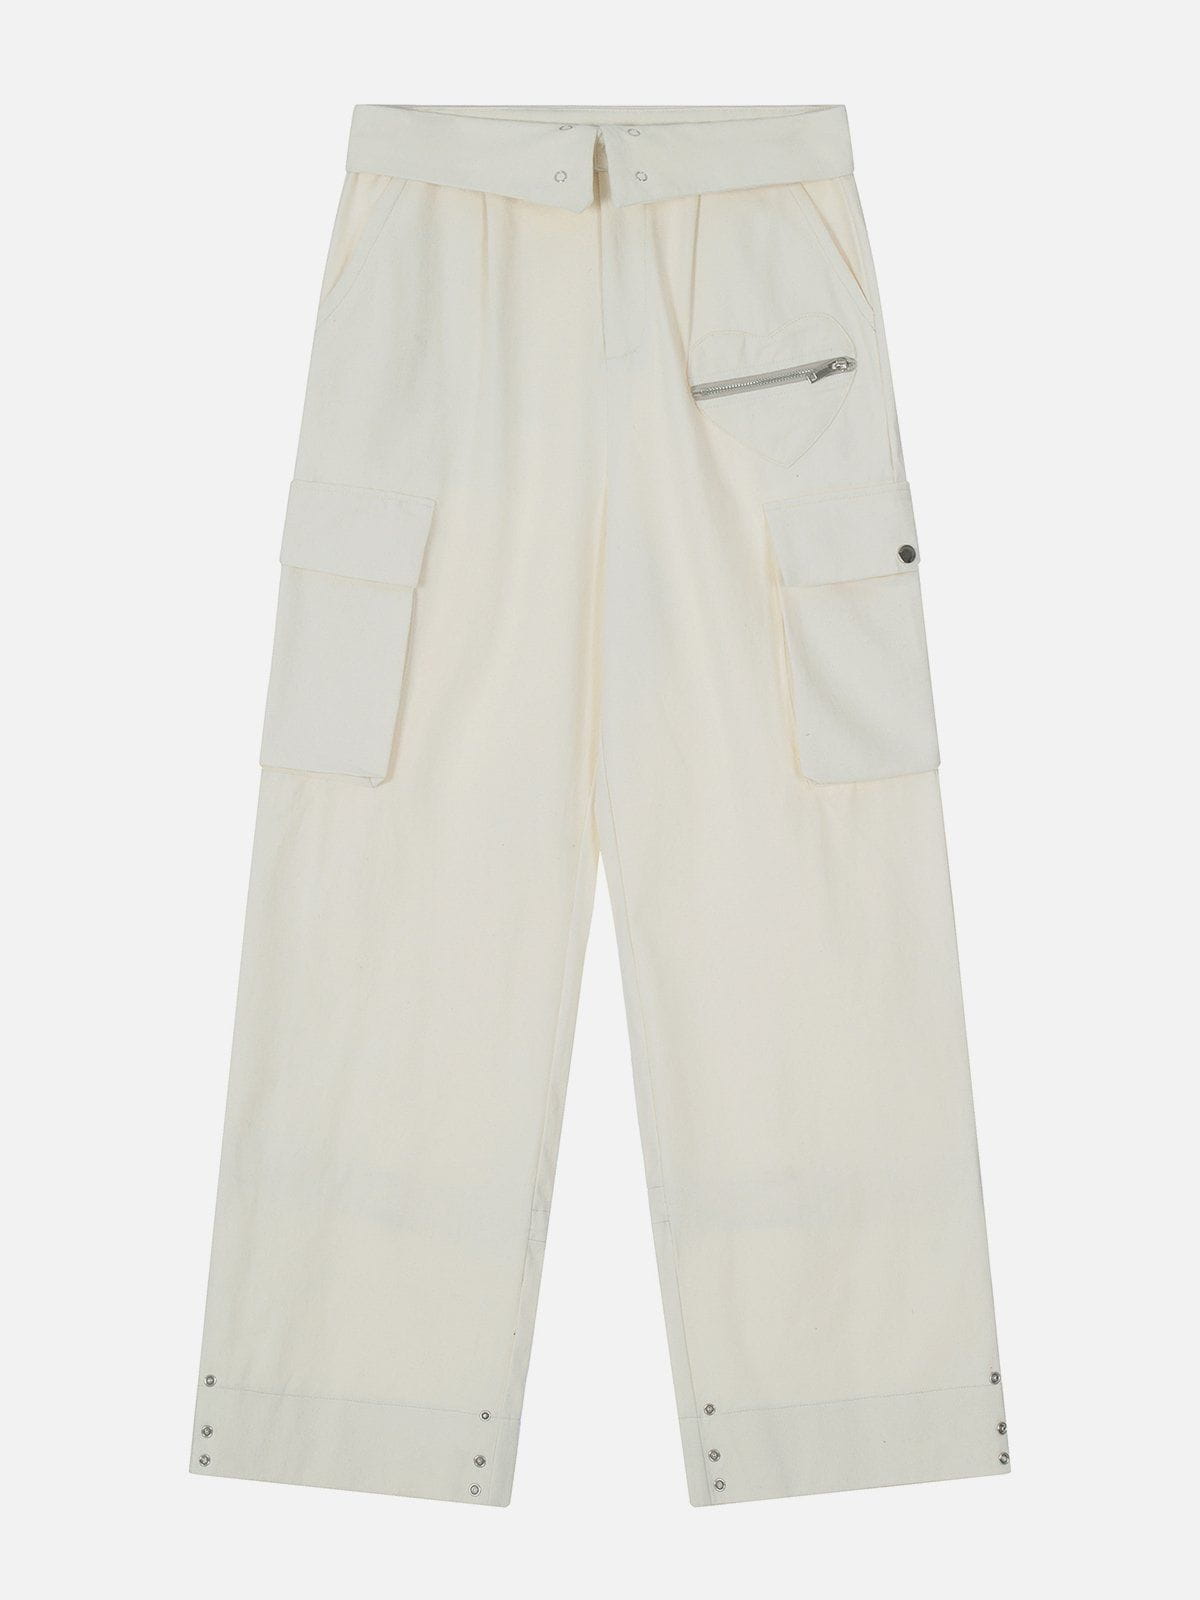 Sneakerland® - Zipper Pocket Cargo Pants